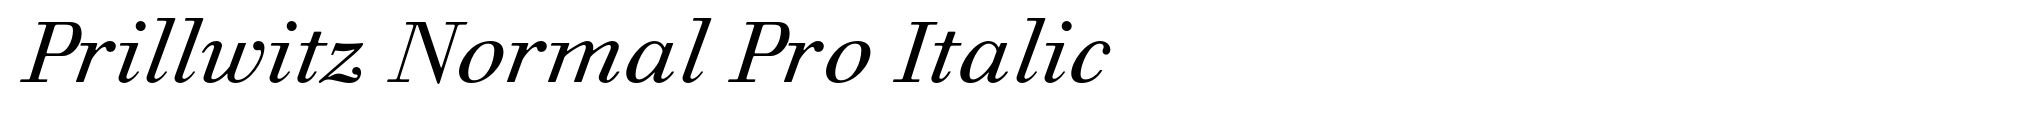 Prillwitz Normal Pro Italic image